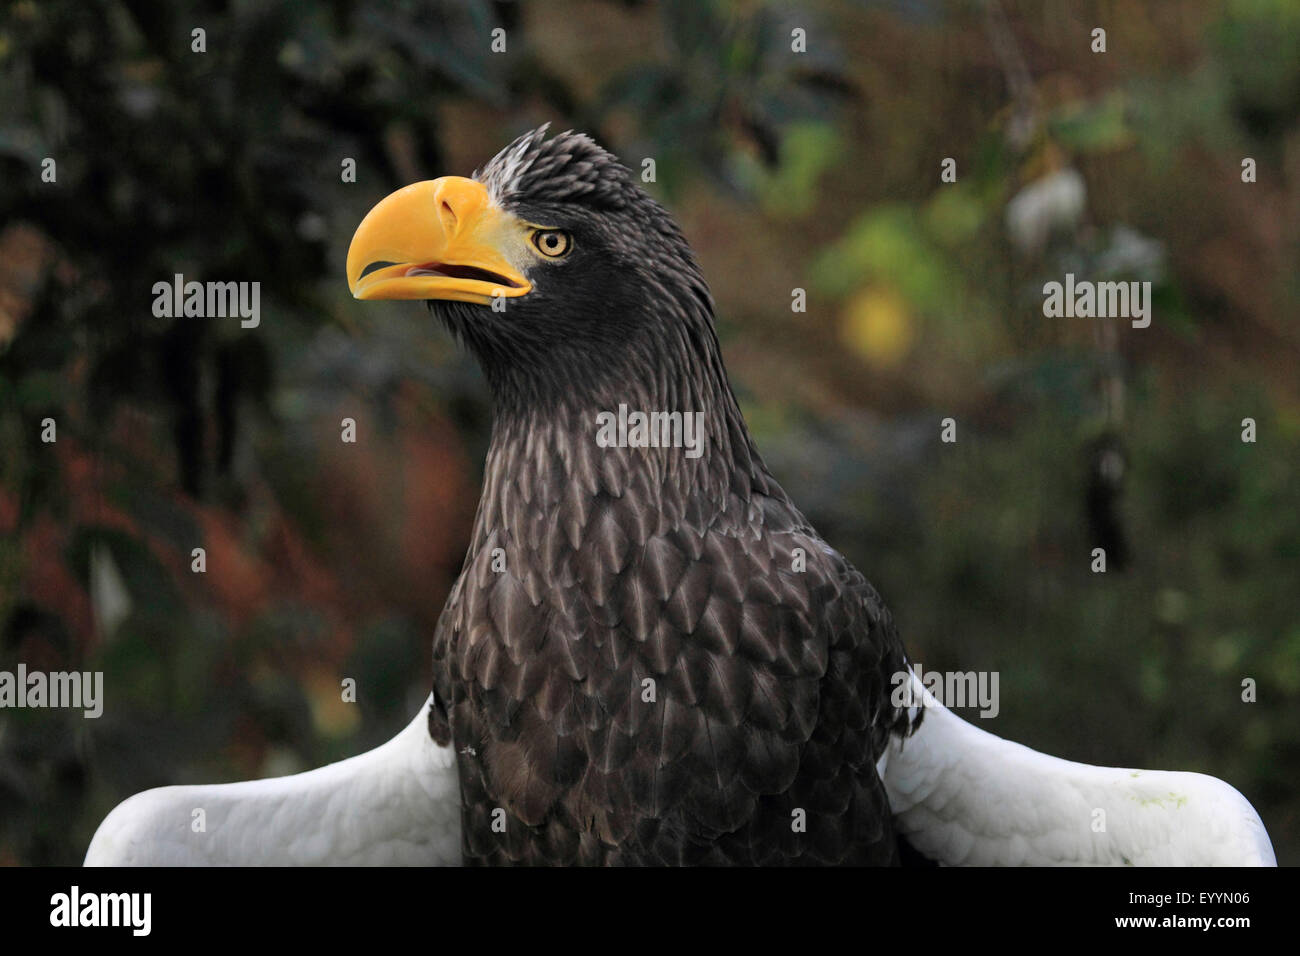 Steller's sea eagle (Haliaeetus pelagicus), portrait Stock Photo